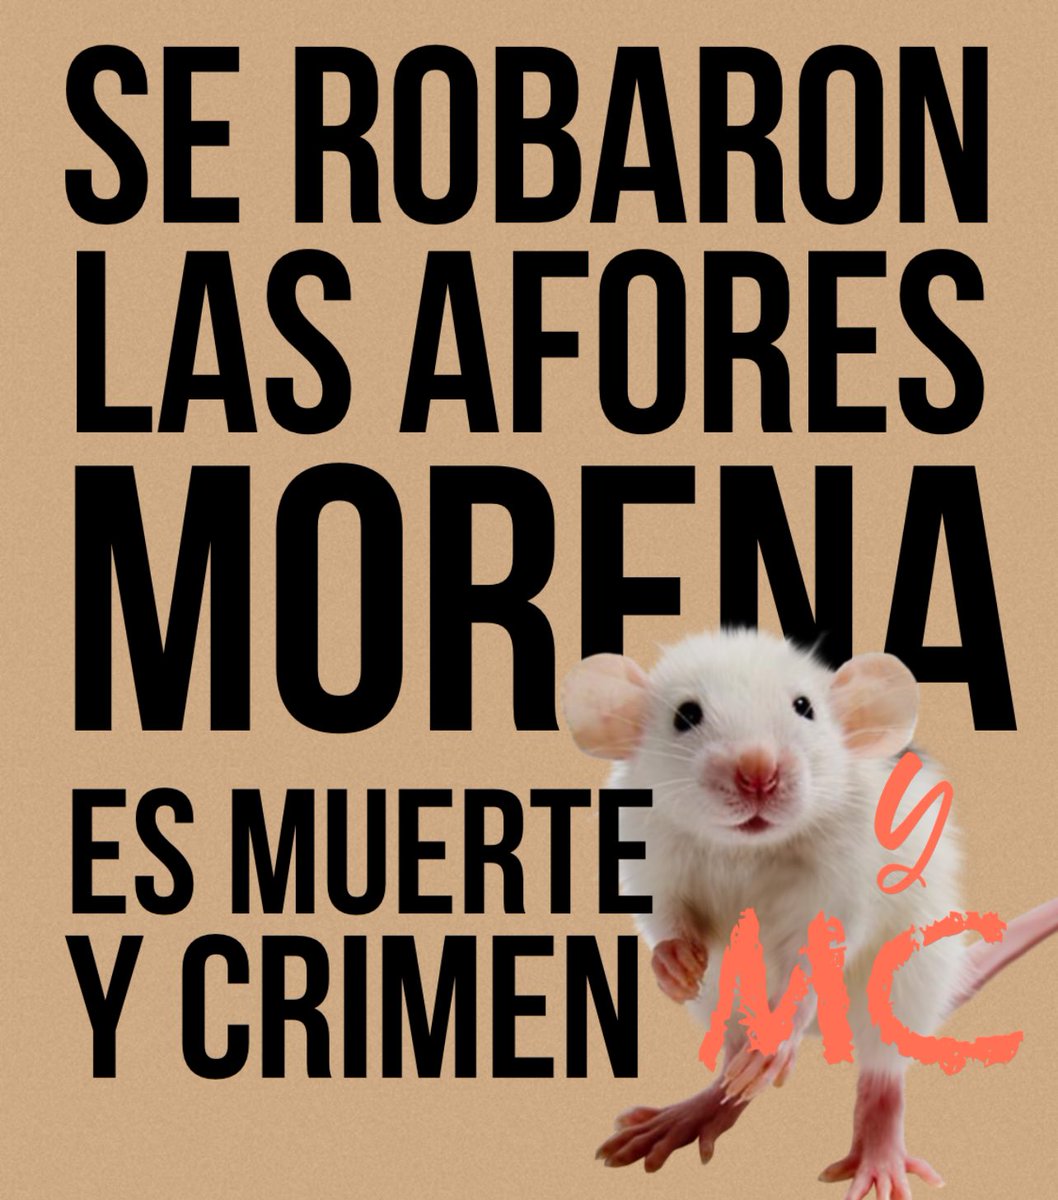 @TendenciaPN ¡¡Se están ROBANDO las Afores!! MC partido esquirol!! NO VOTES POR MC NO VOTES POR MORENA #MCesMorena #MCpartidoEsquirol #NoVotesPorMC #NoVotesPorMorena #MorenaEsMuerte #MorenaEsDestruccion #MorenaNosEstaMatando #LasAforesNoSeTocan NiUnVotoAMorena #NiUnVotoAMC #YaSeVan